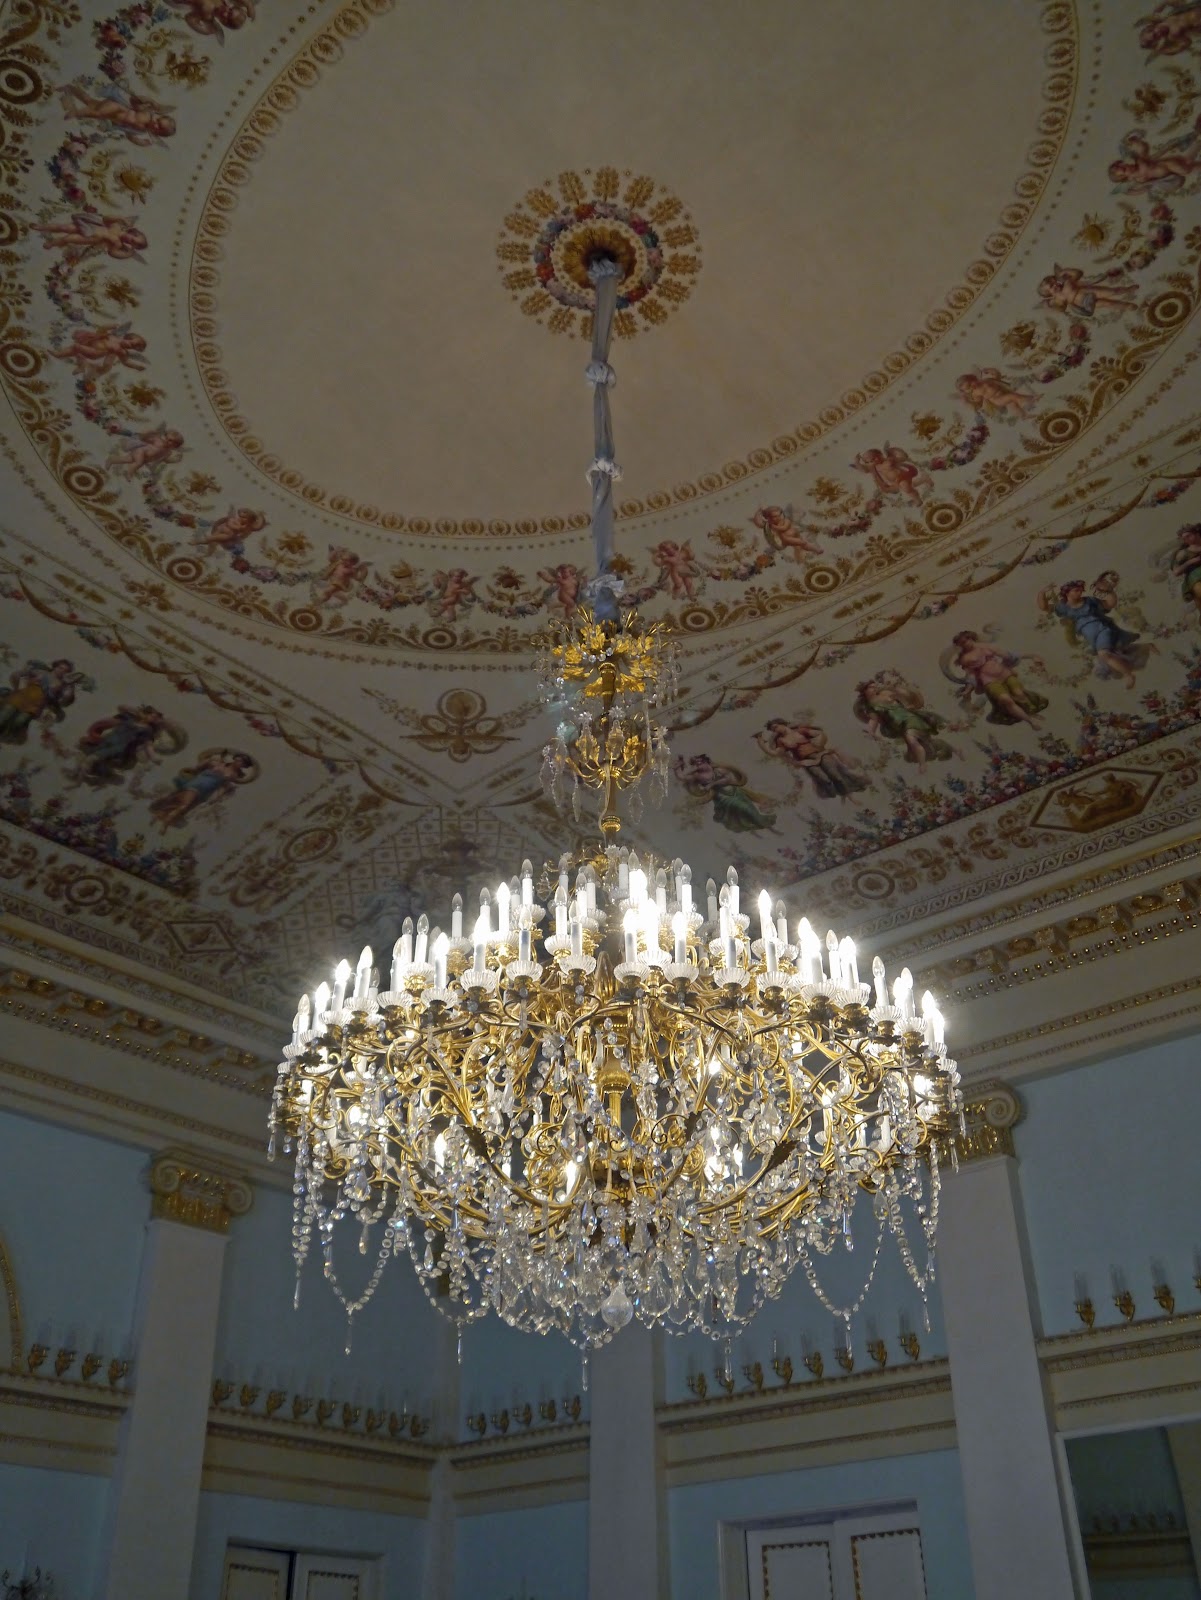 Photo blog: St Petersburg Yusupov Palace-chandeliers